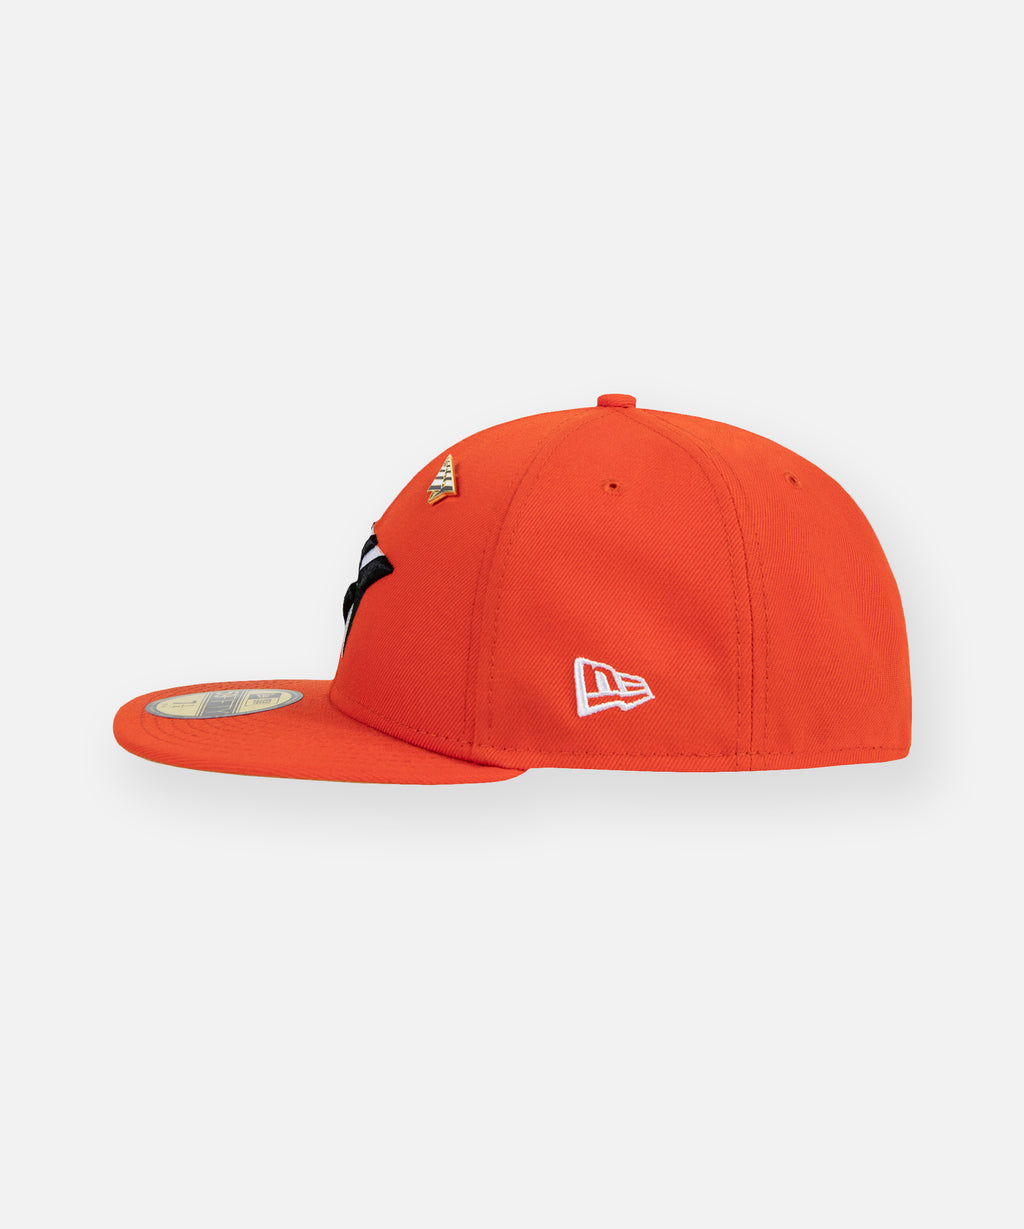 Miami Marlins BAYCIK Black-Orange Fitted Hat by New Era